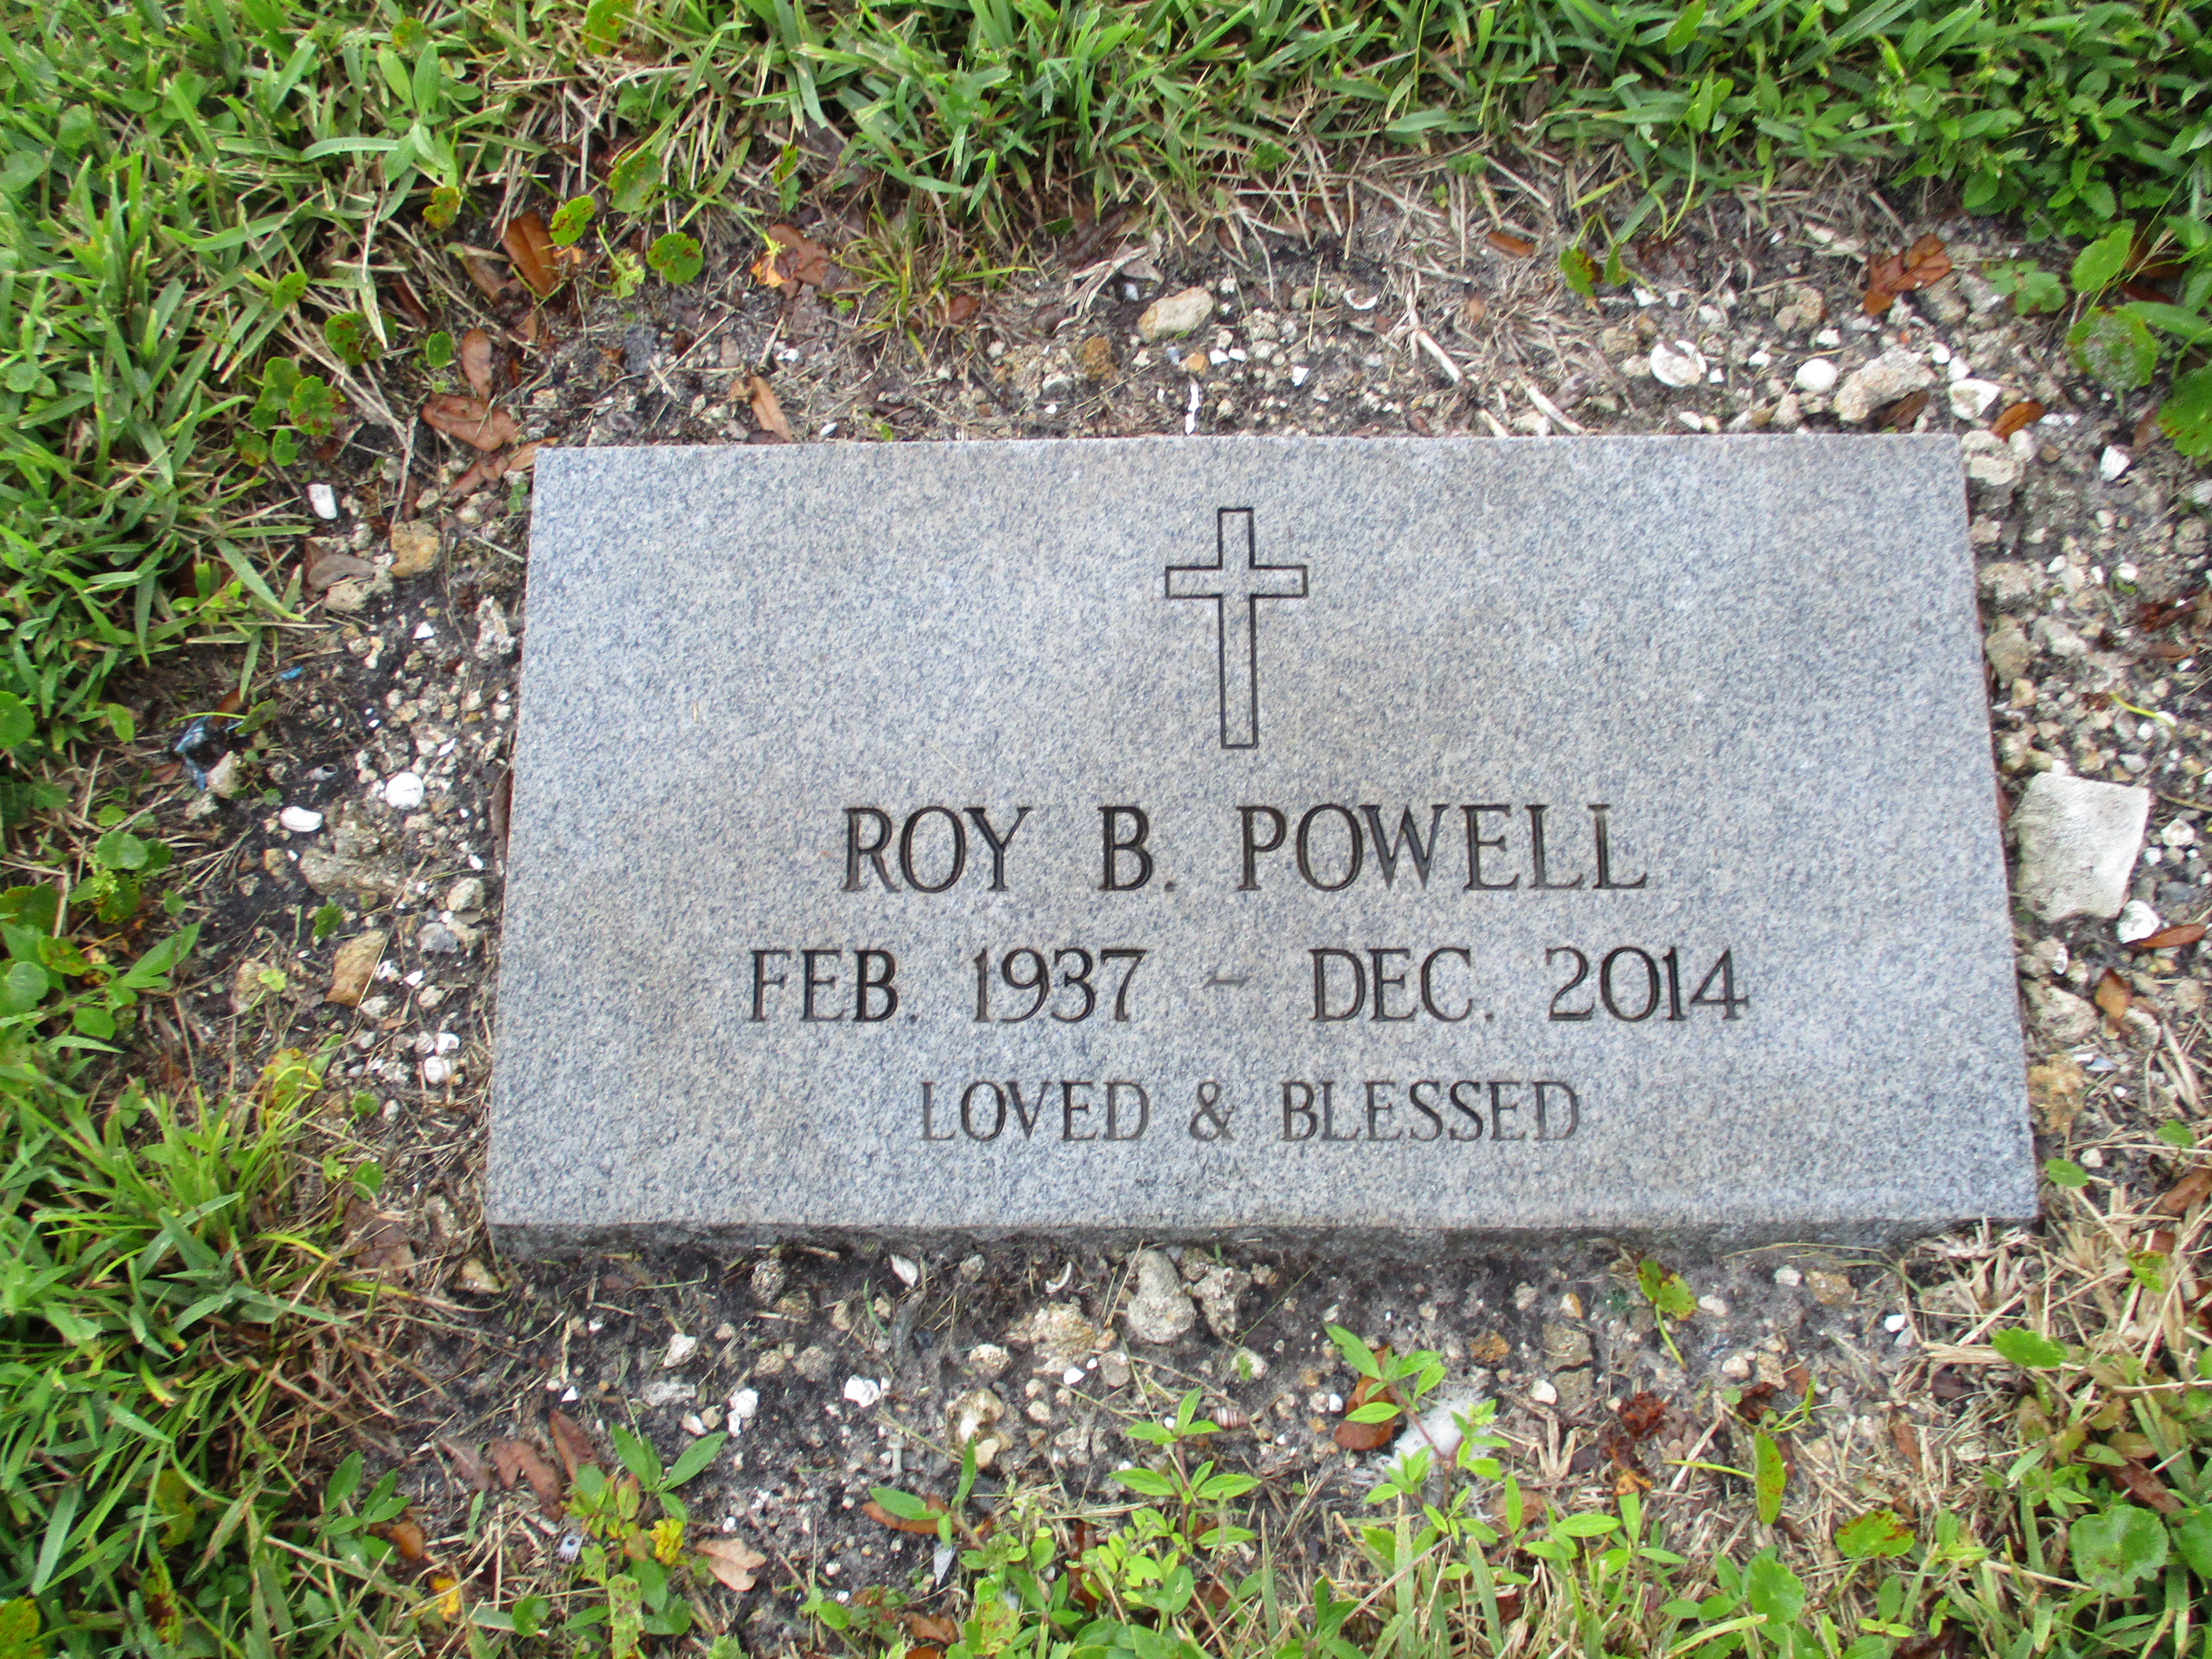 Roy B Powell